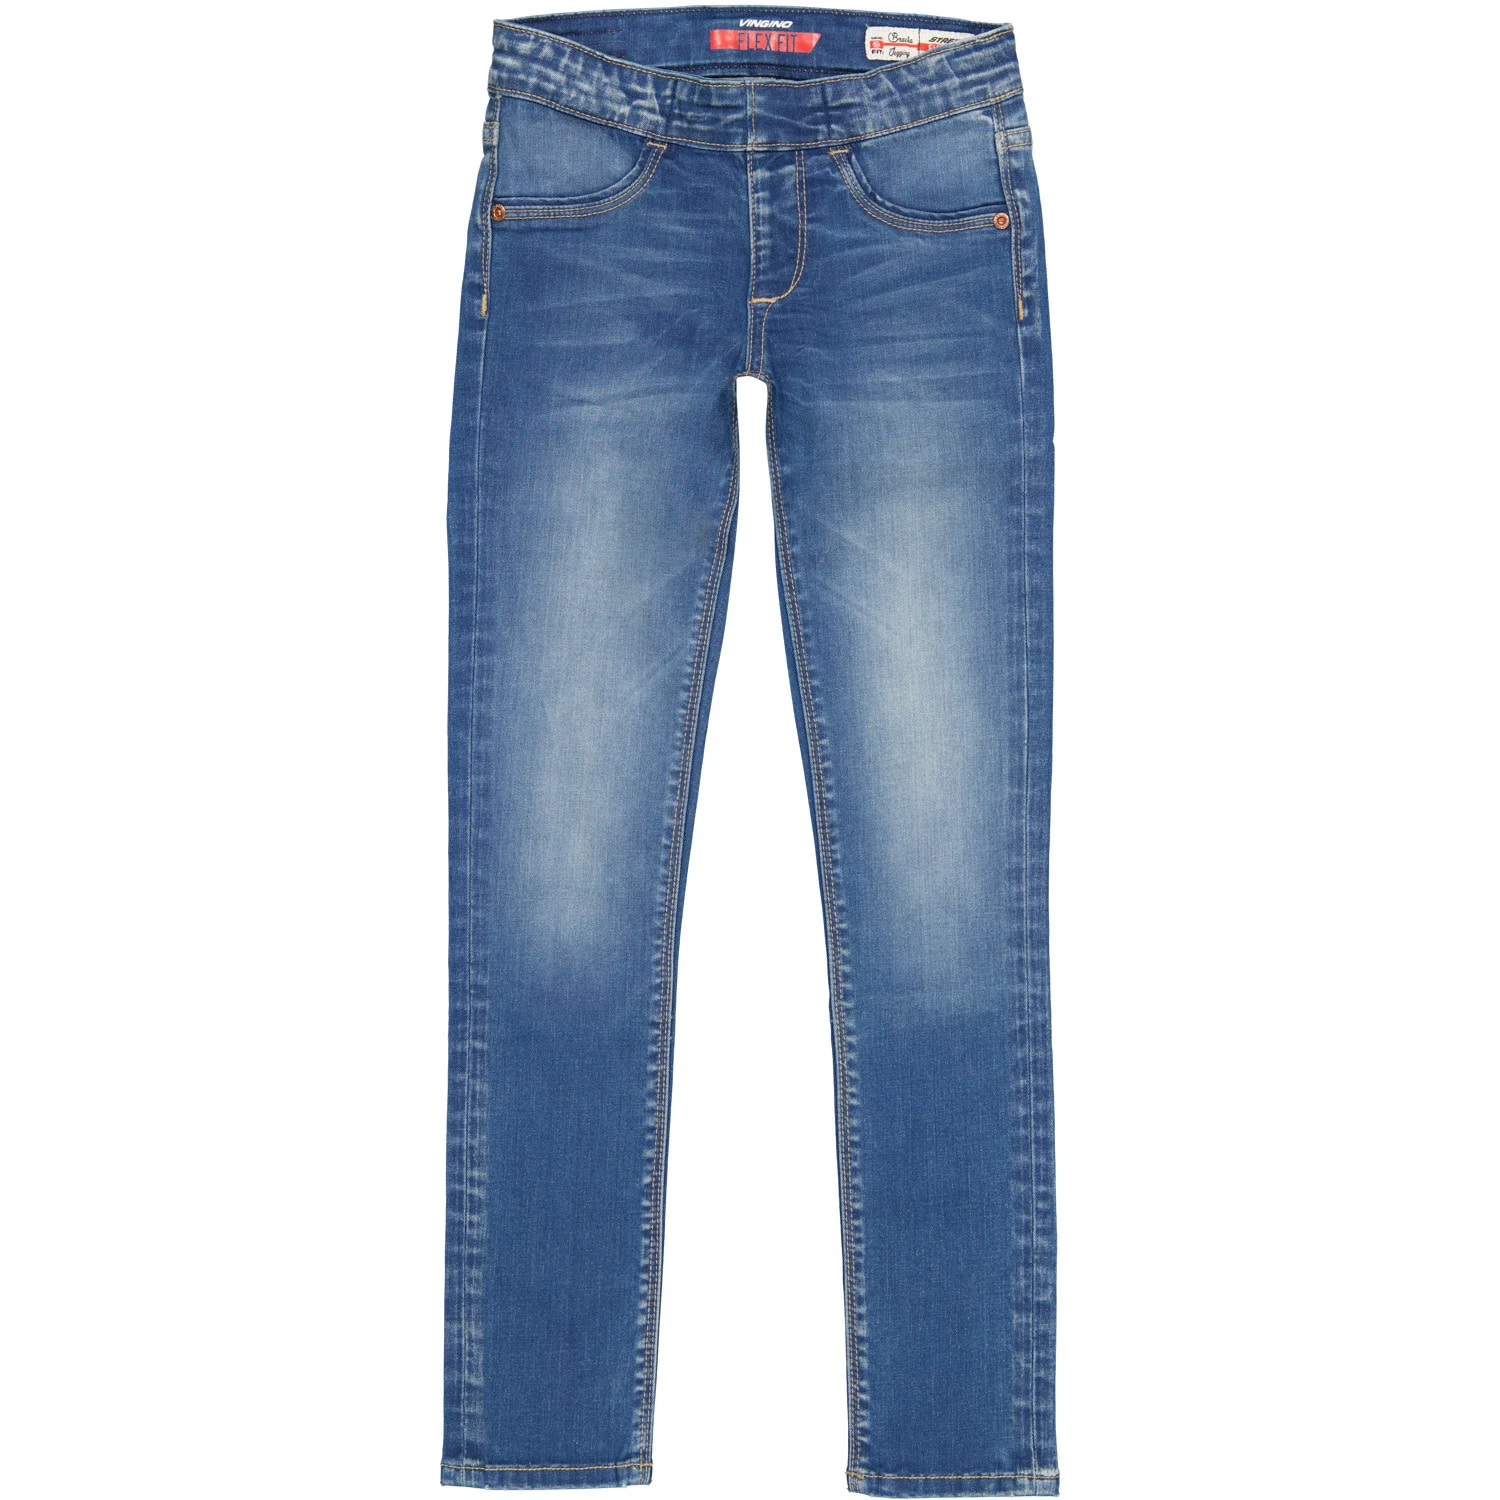 Afbeelding van Vingino Meiden jeans super skinny flex fit bracha mid blue wash